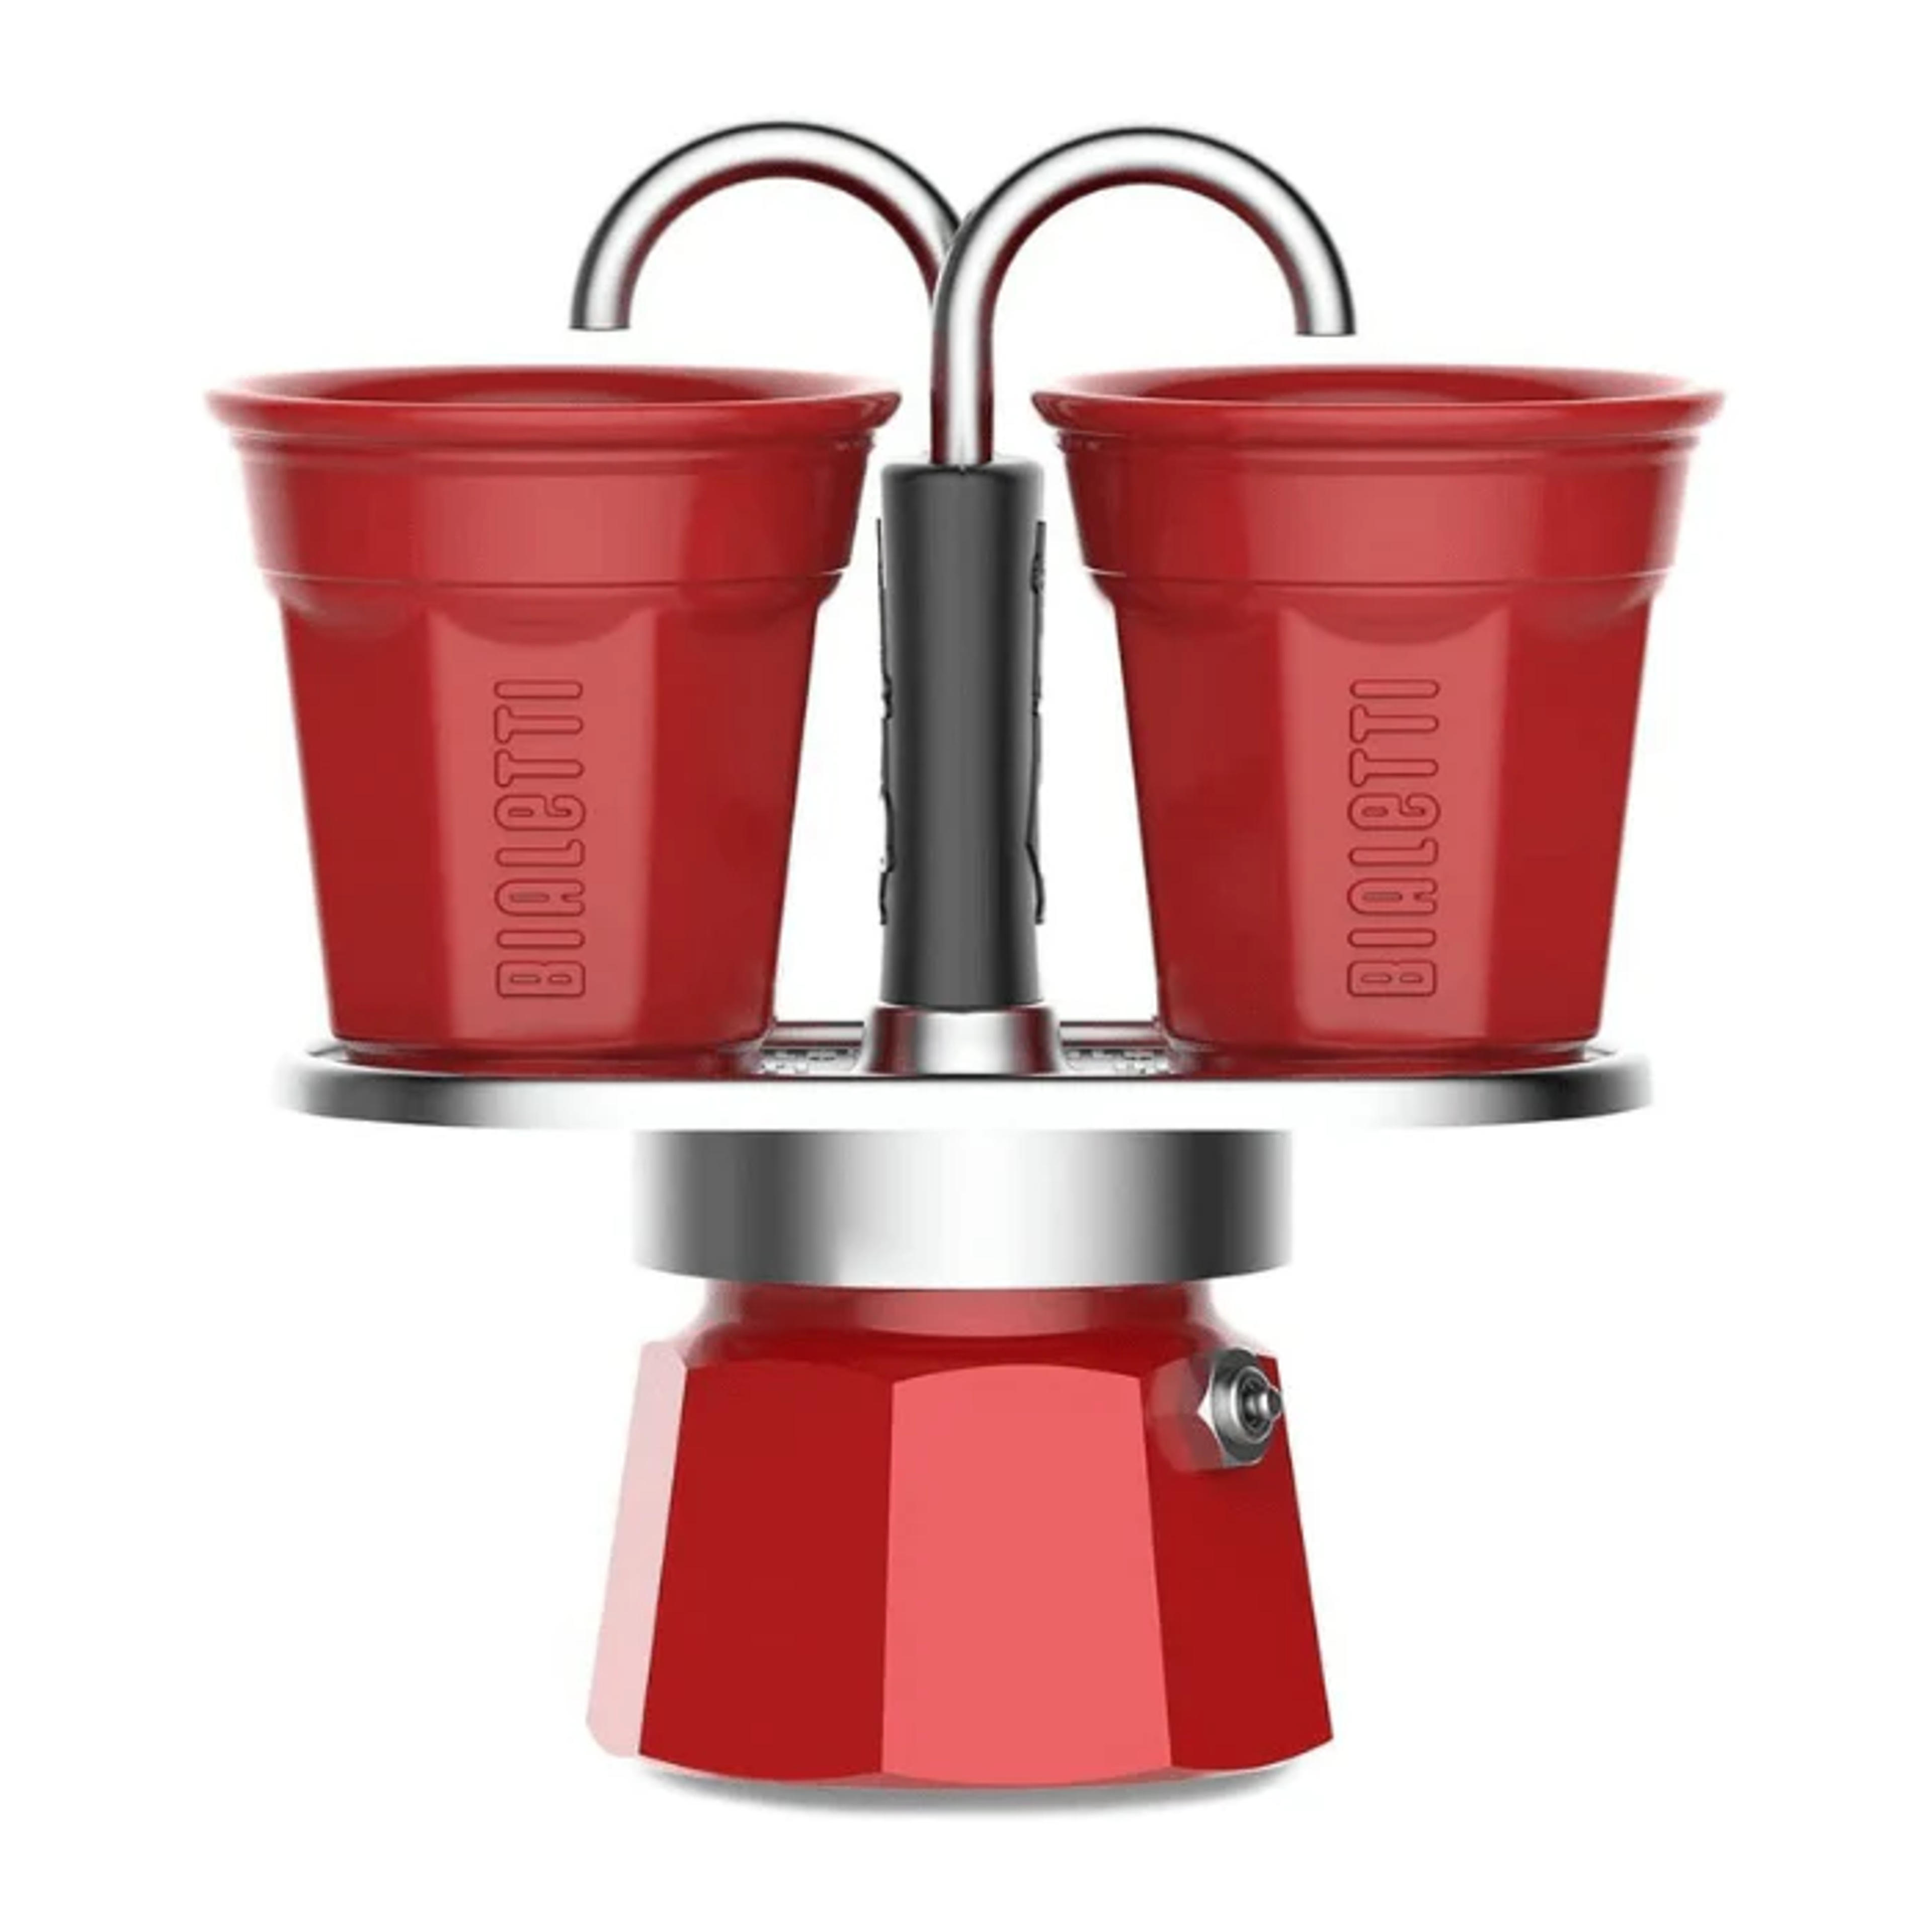 Bialetti Moka Express 2-Cup Mini Stovetop Espresso Maker with Cups